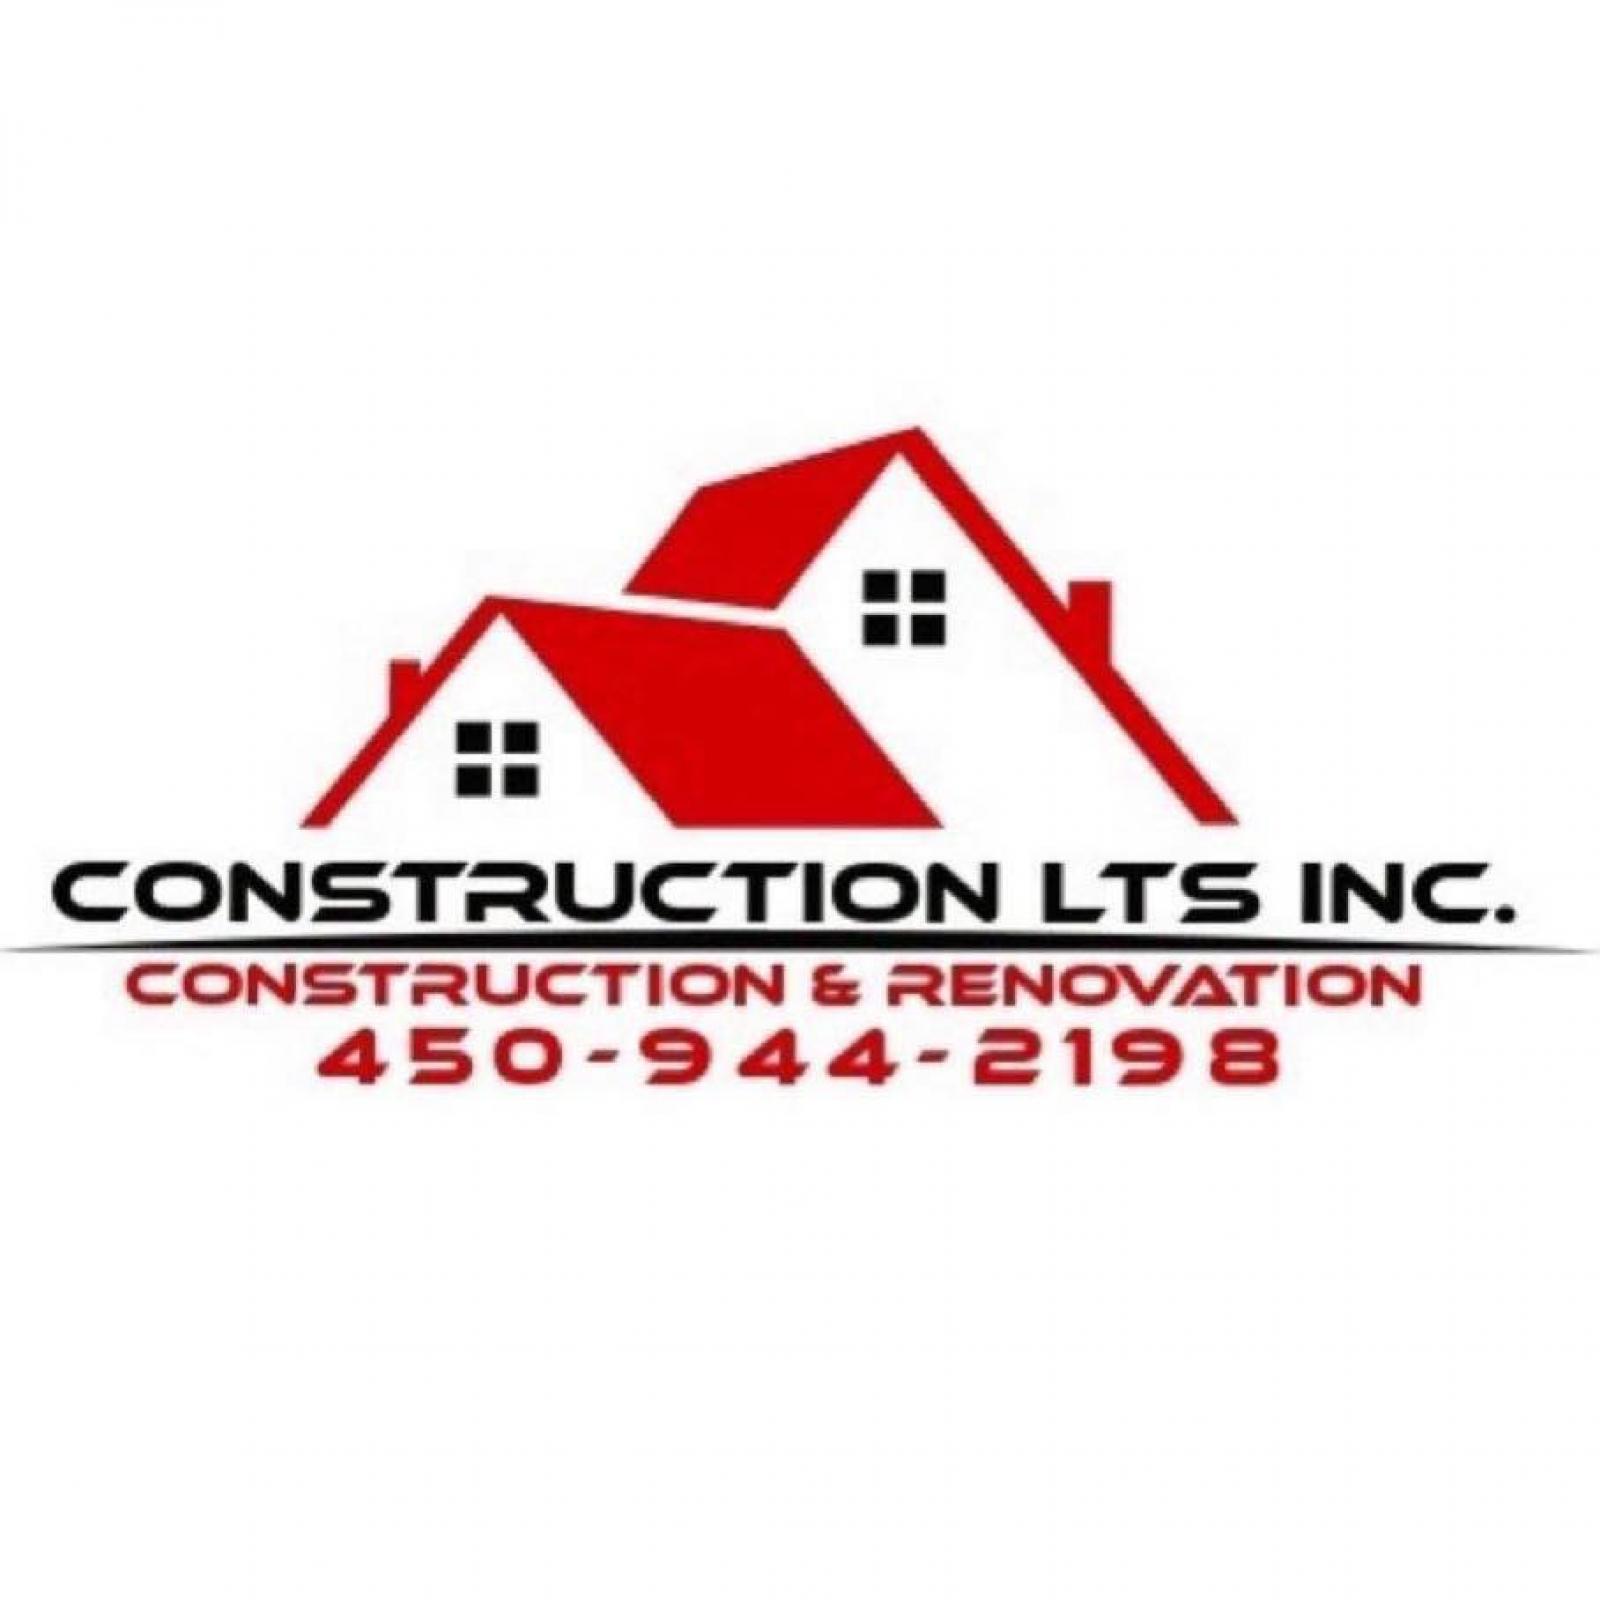 Construction LTS inc. Logo